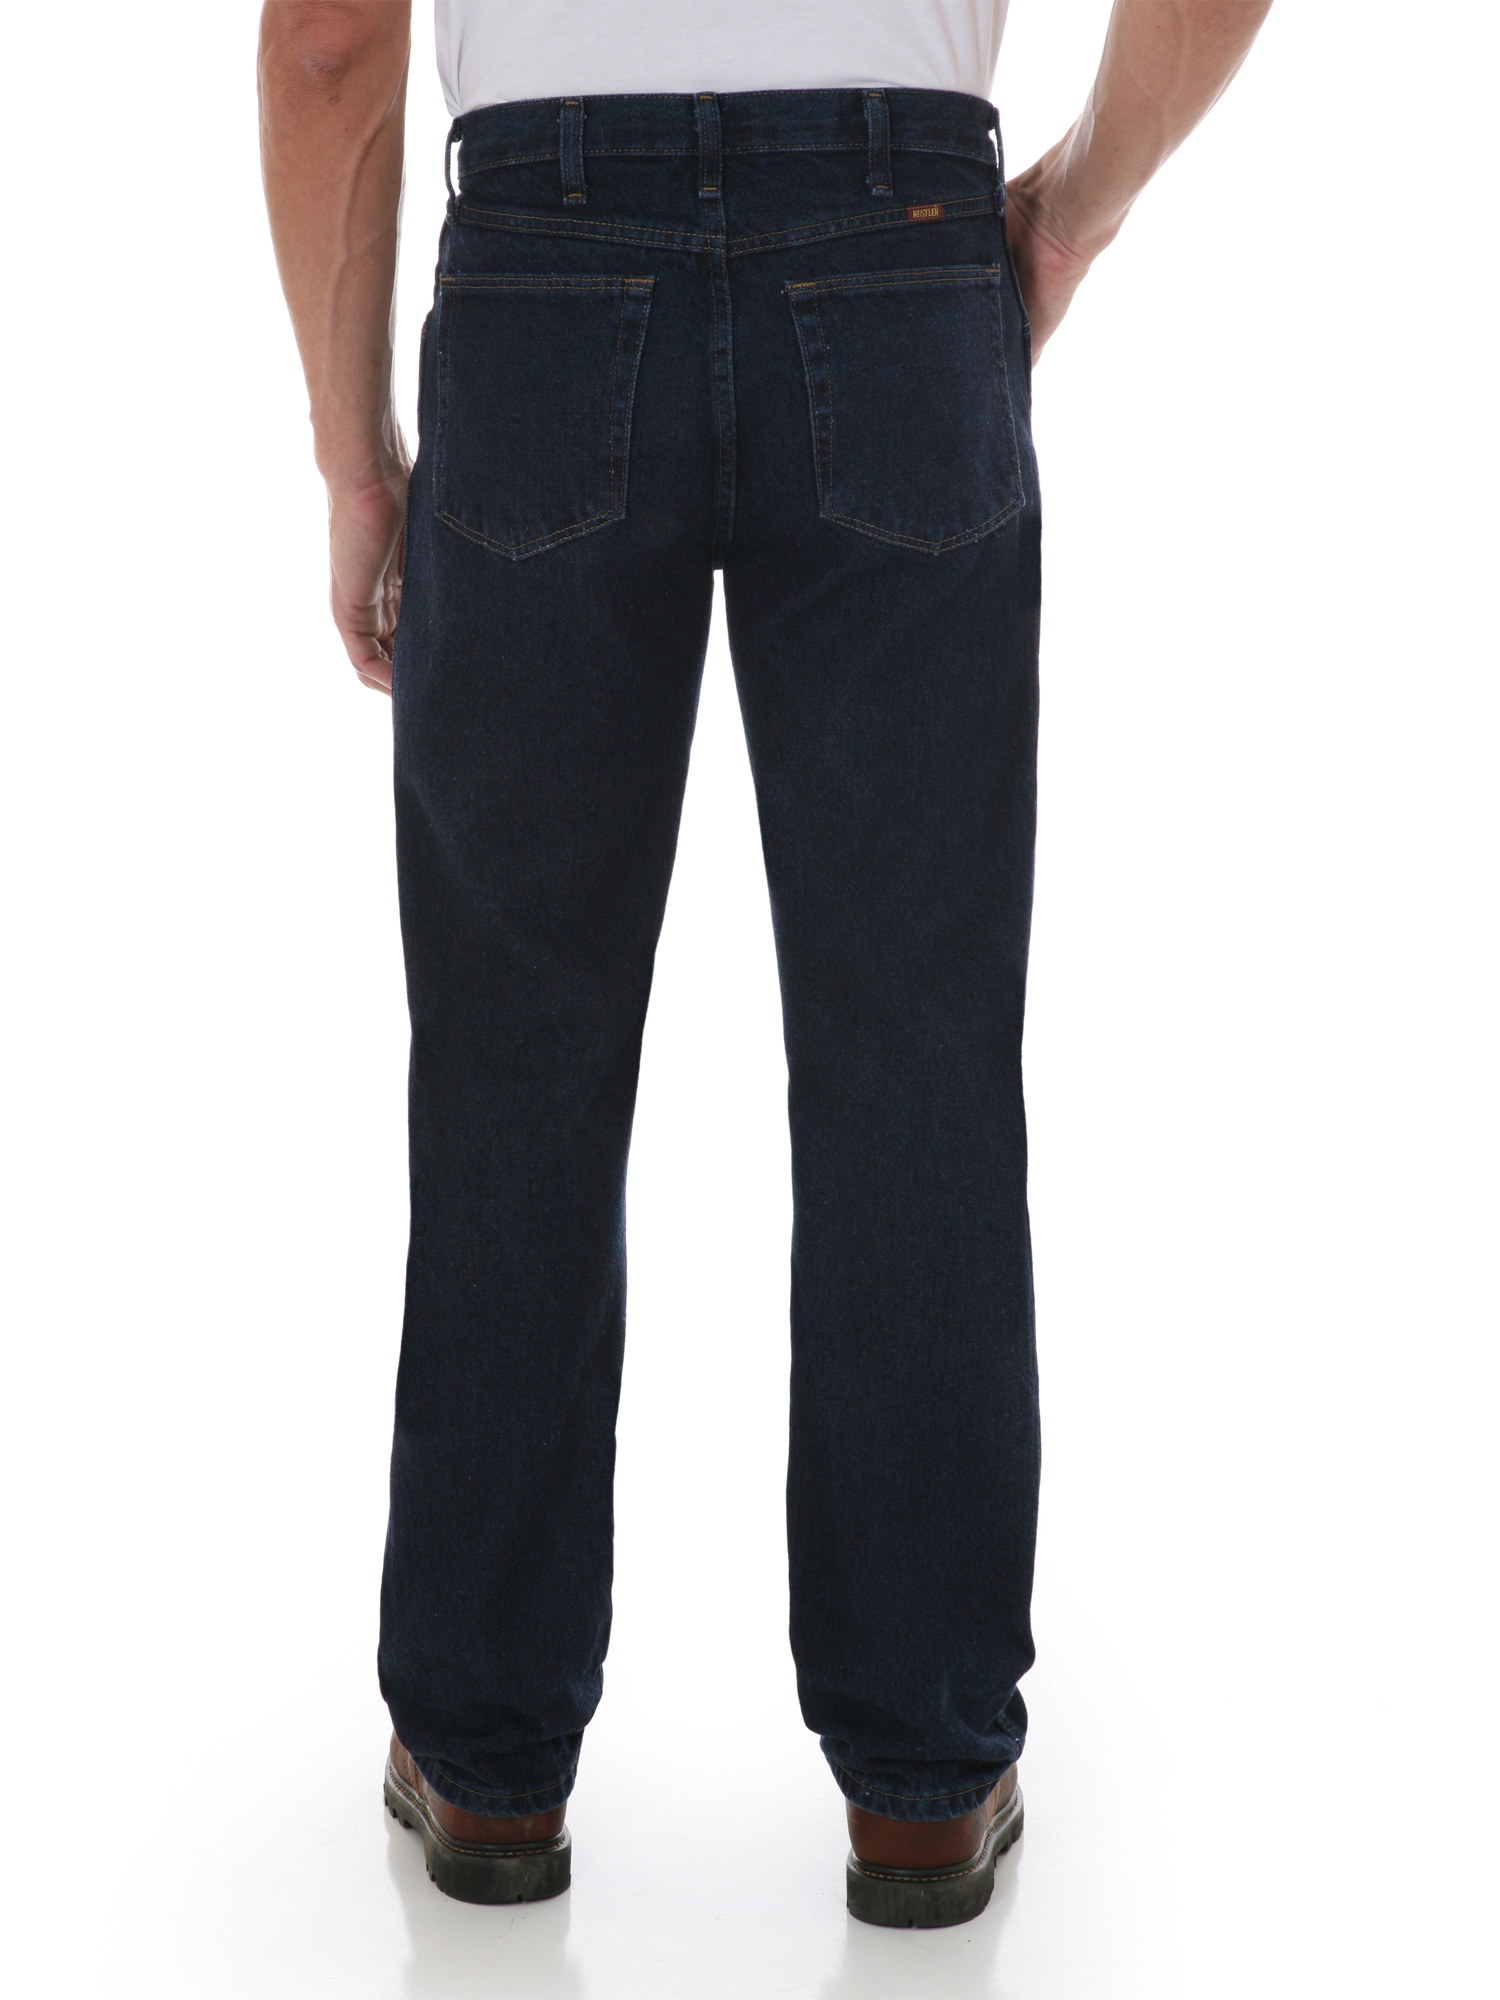 Wrangler Rustler Men's and Big Men's Regular Fit Boot Cut Cotton Jeans - image 3 of 5